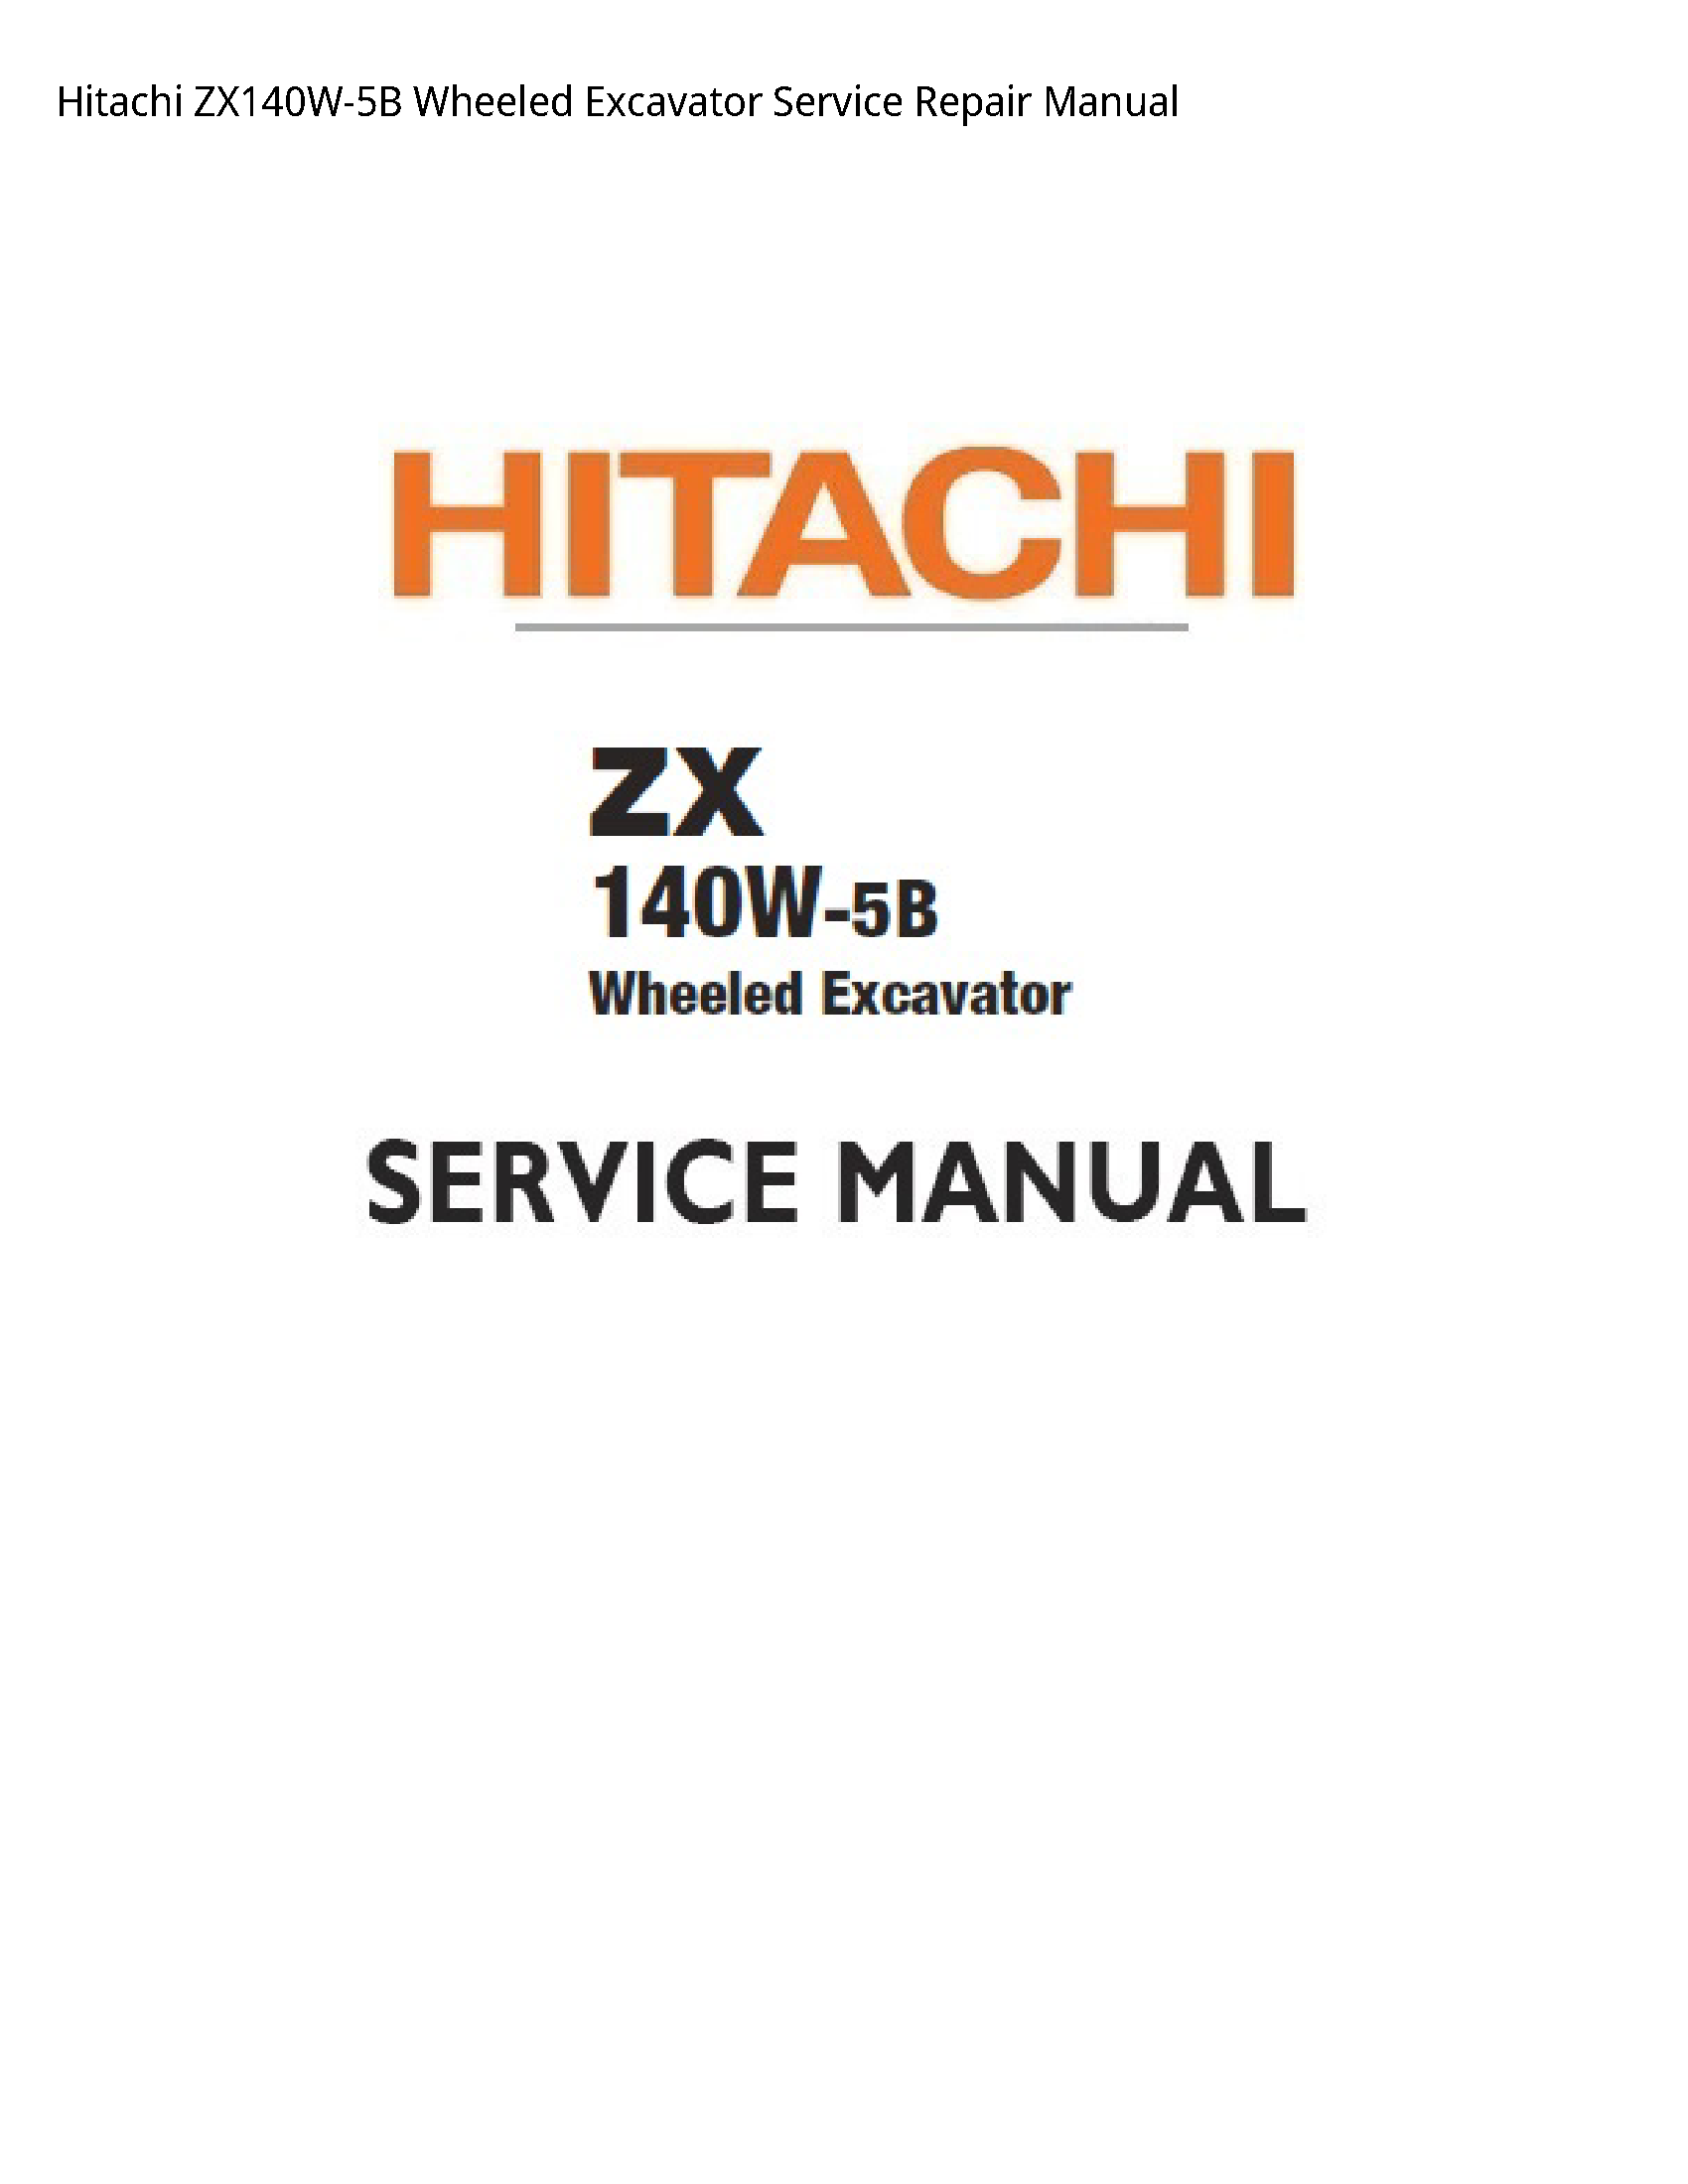 Hitachi ZX140W-5B Wheeled Excavator manual